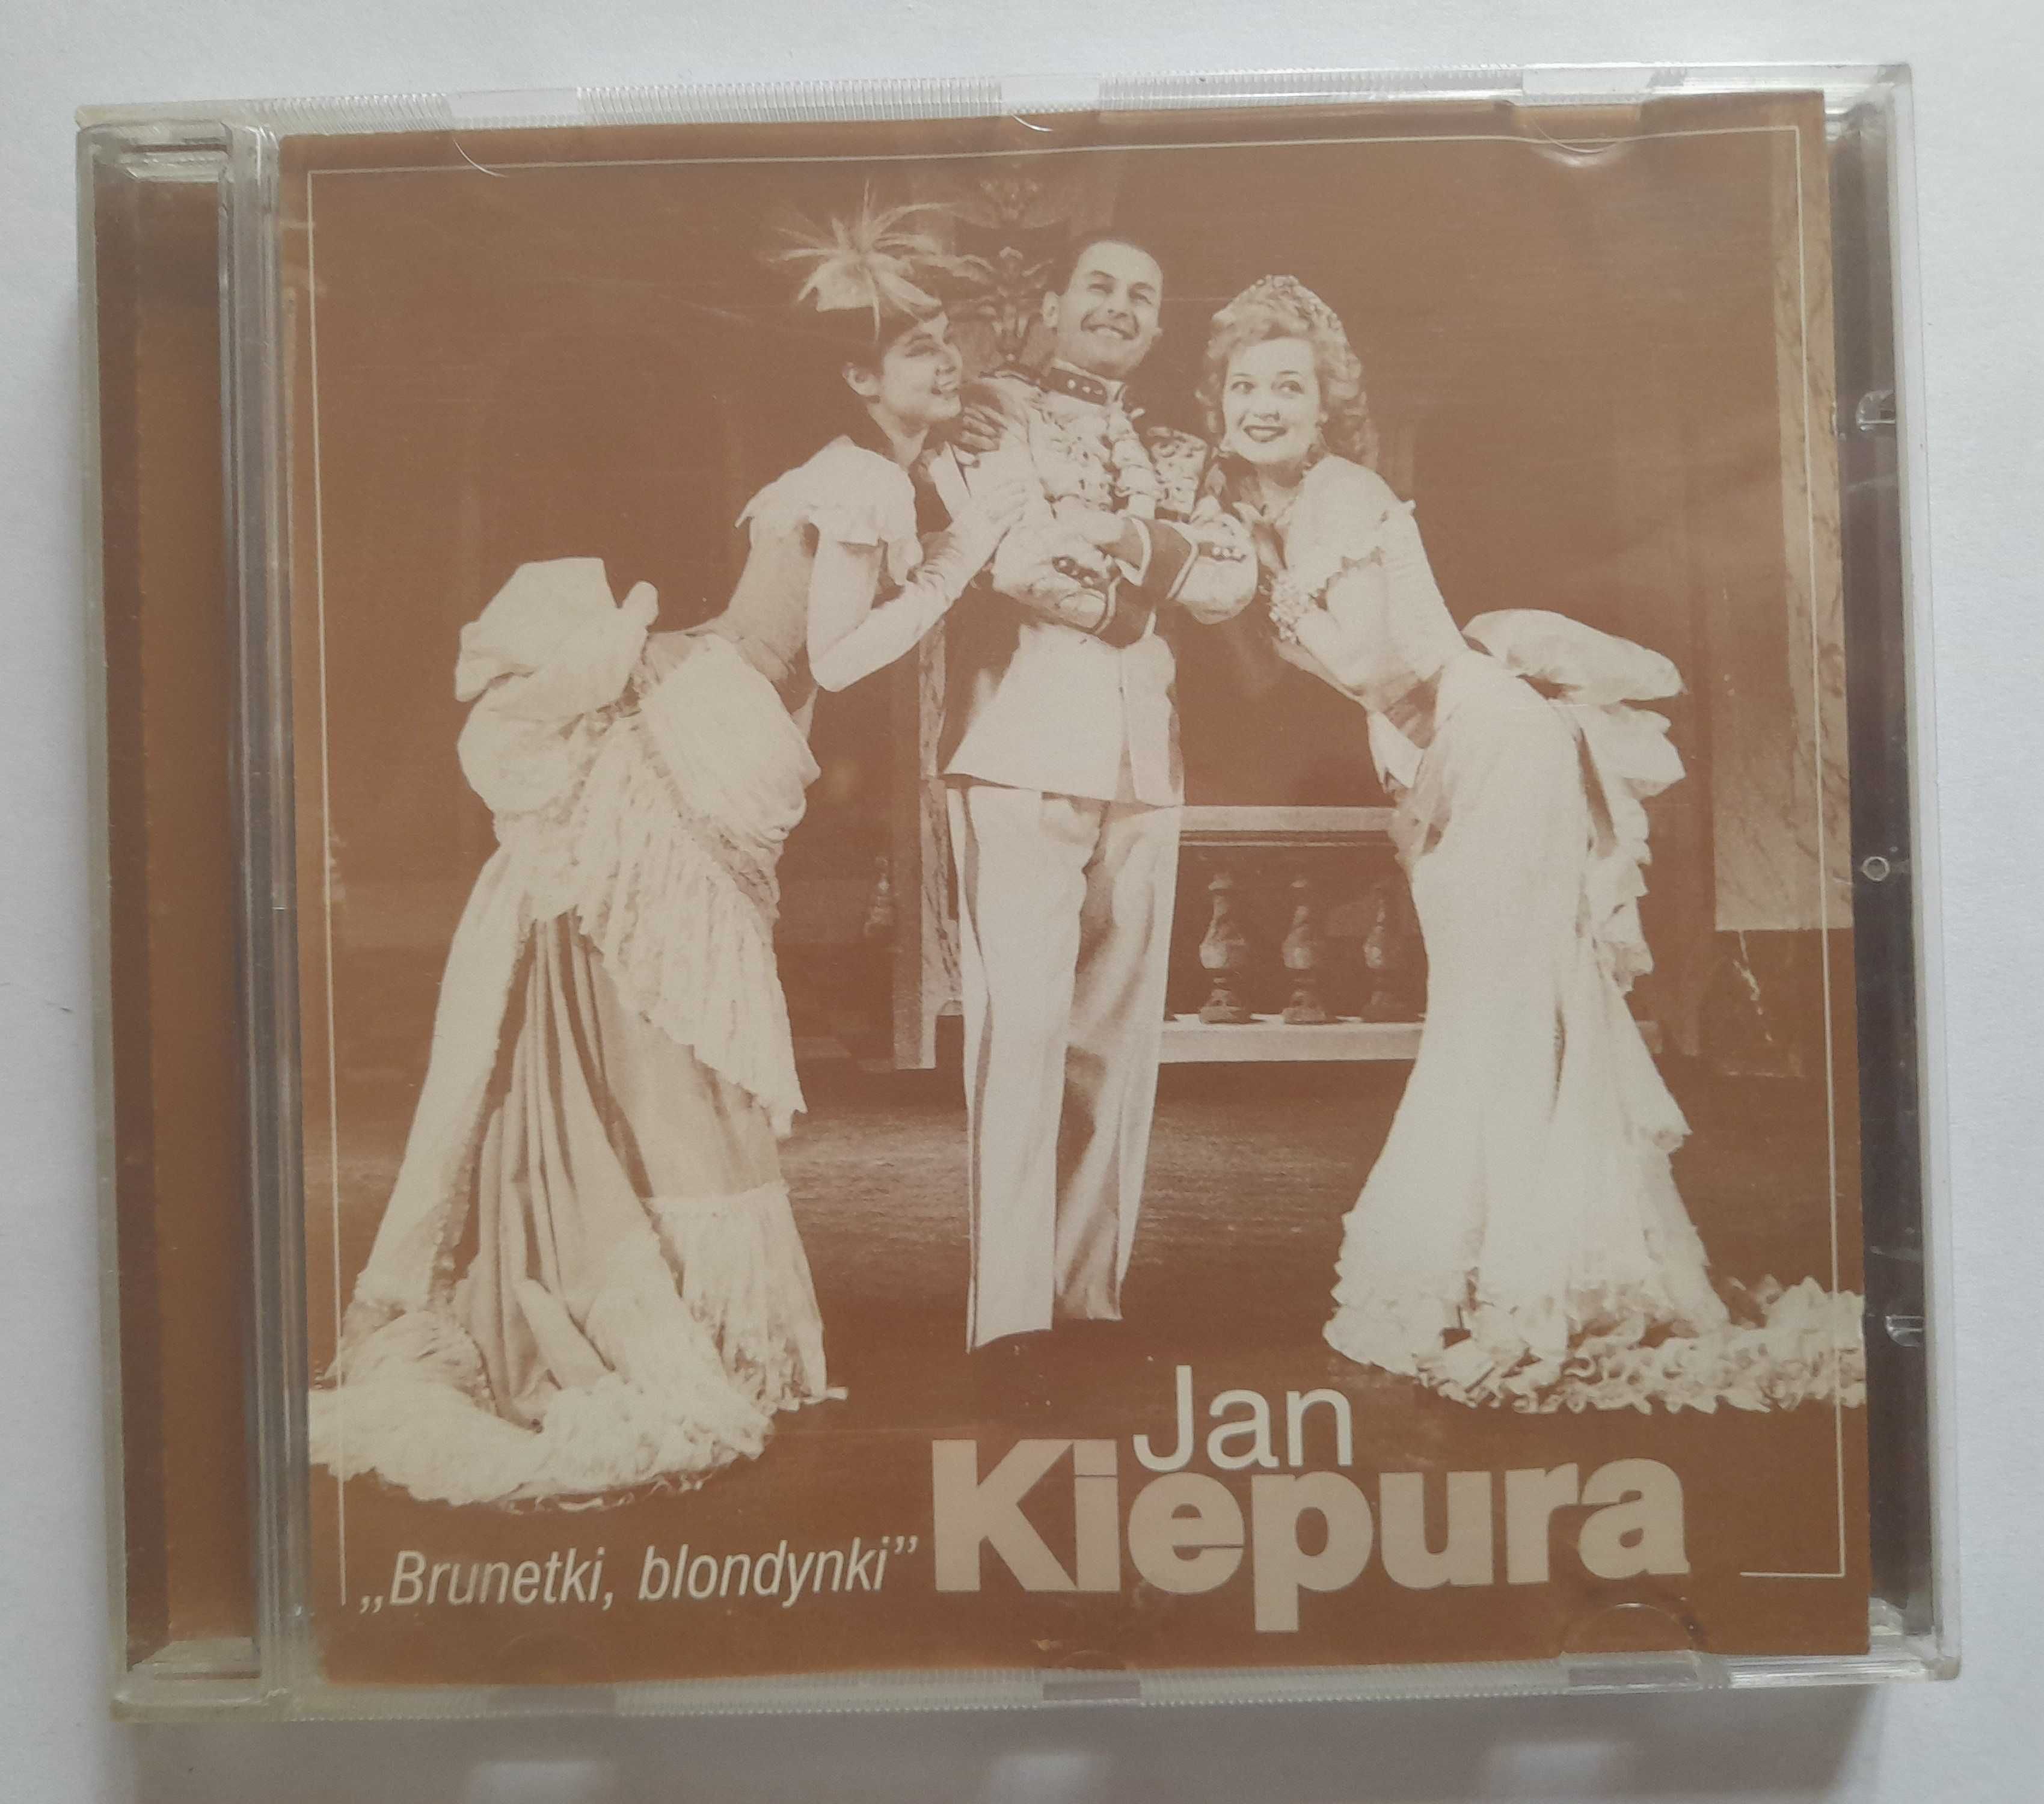 CD Brunetki Blondynki - Jan Kiepura